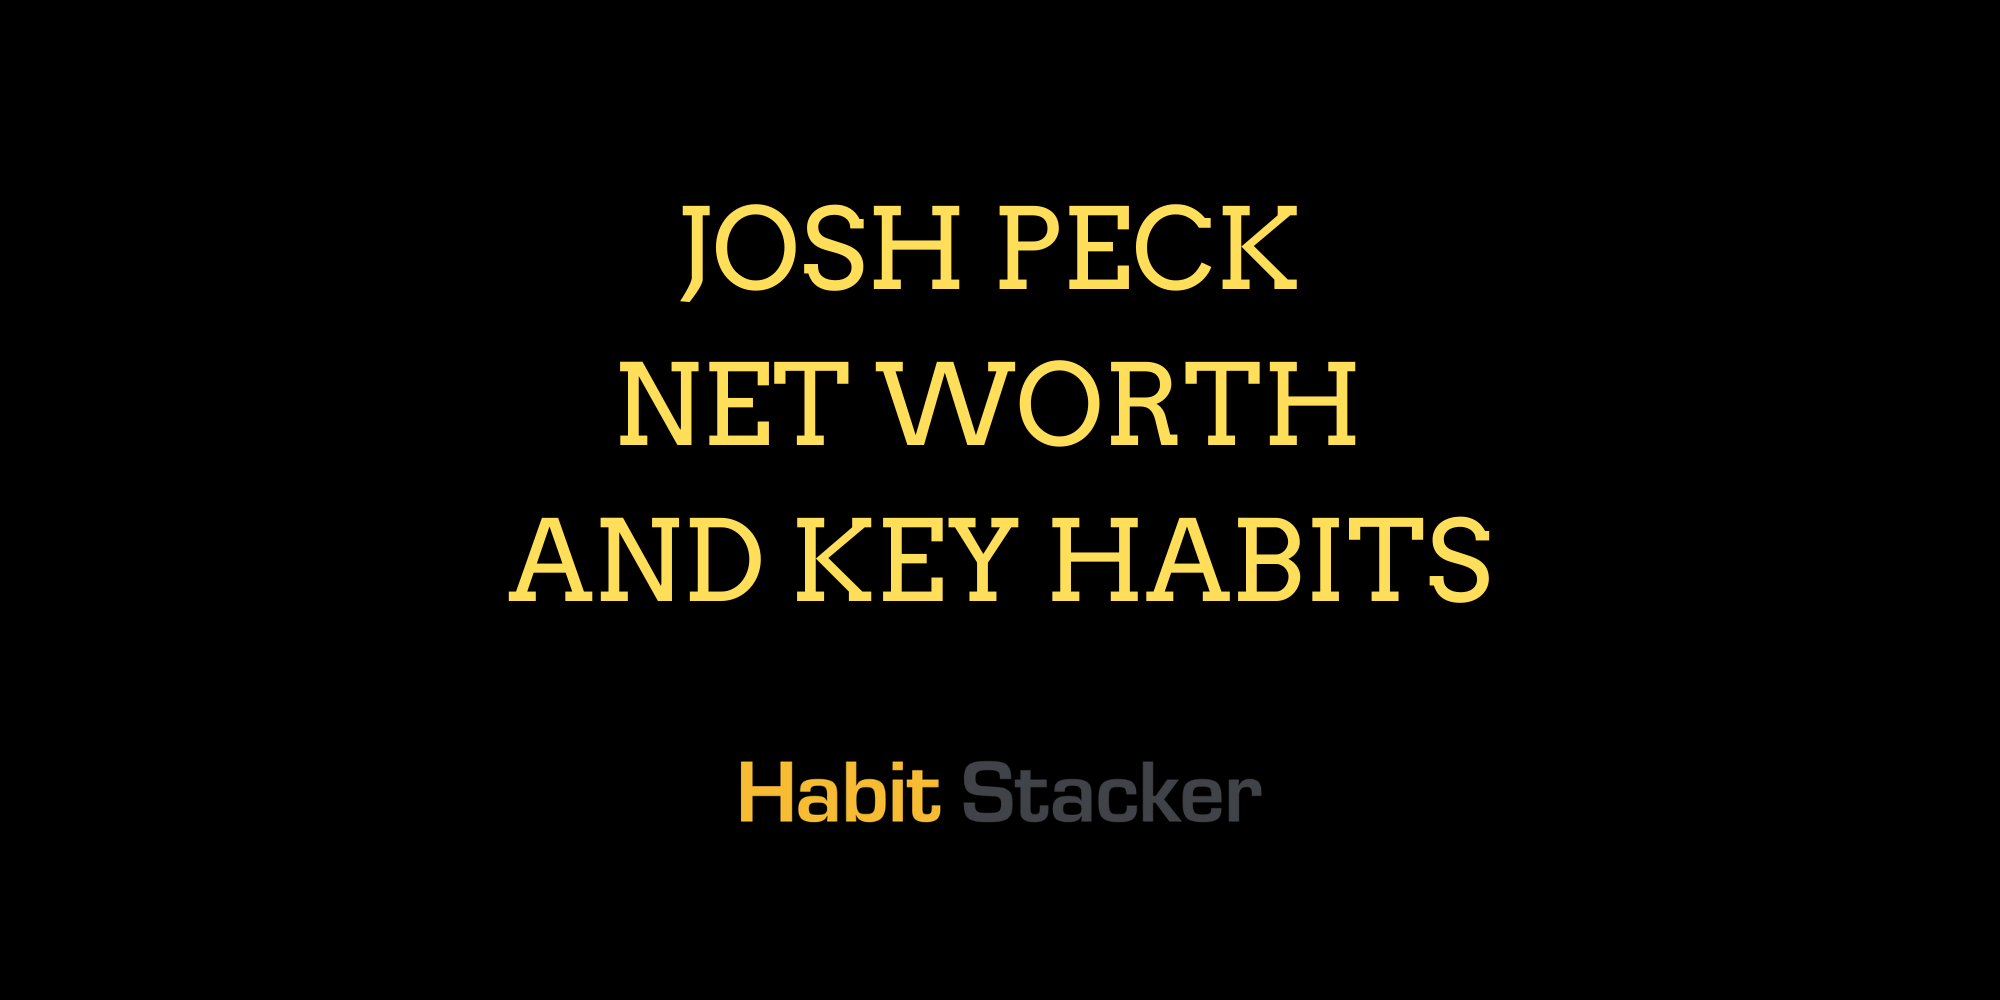 Josh Peck Net Worth and Key Habits